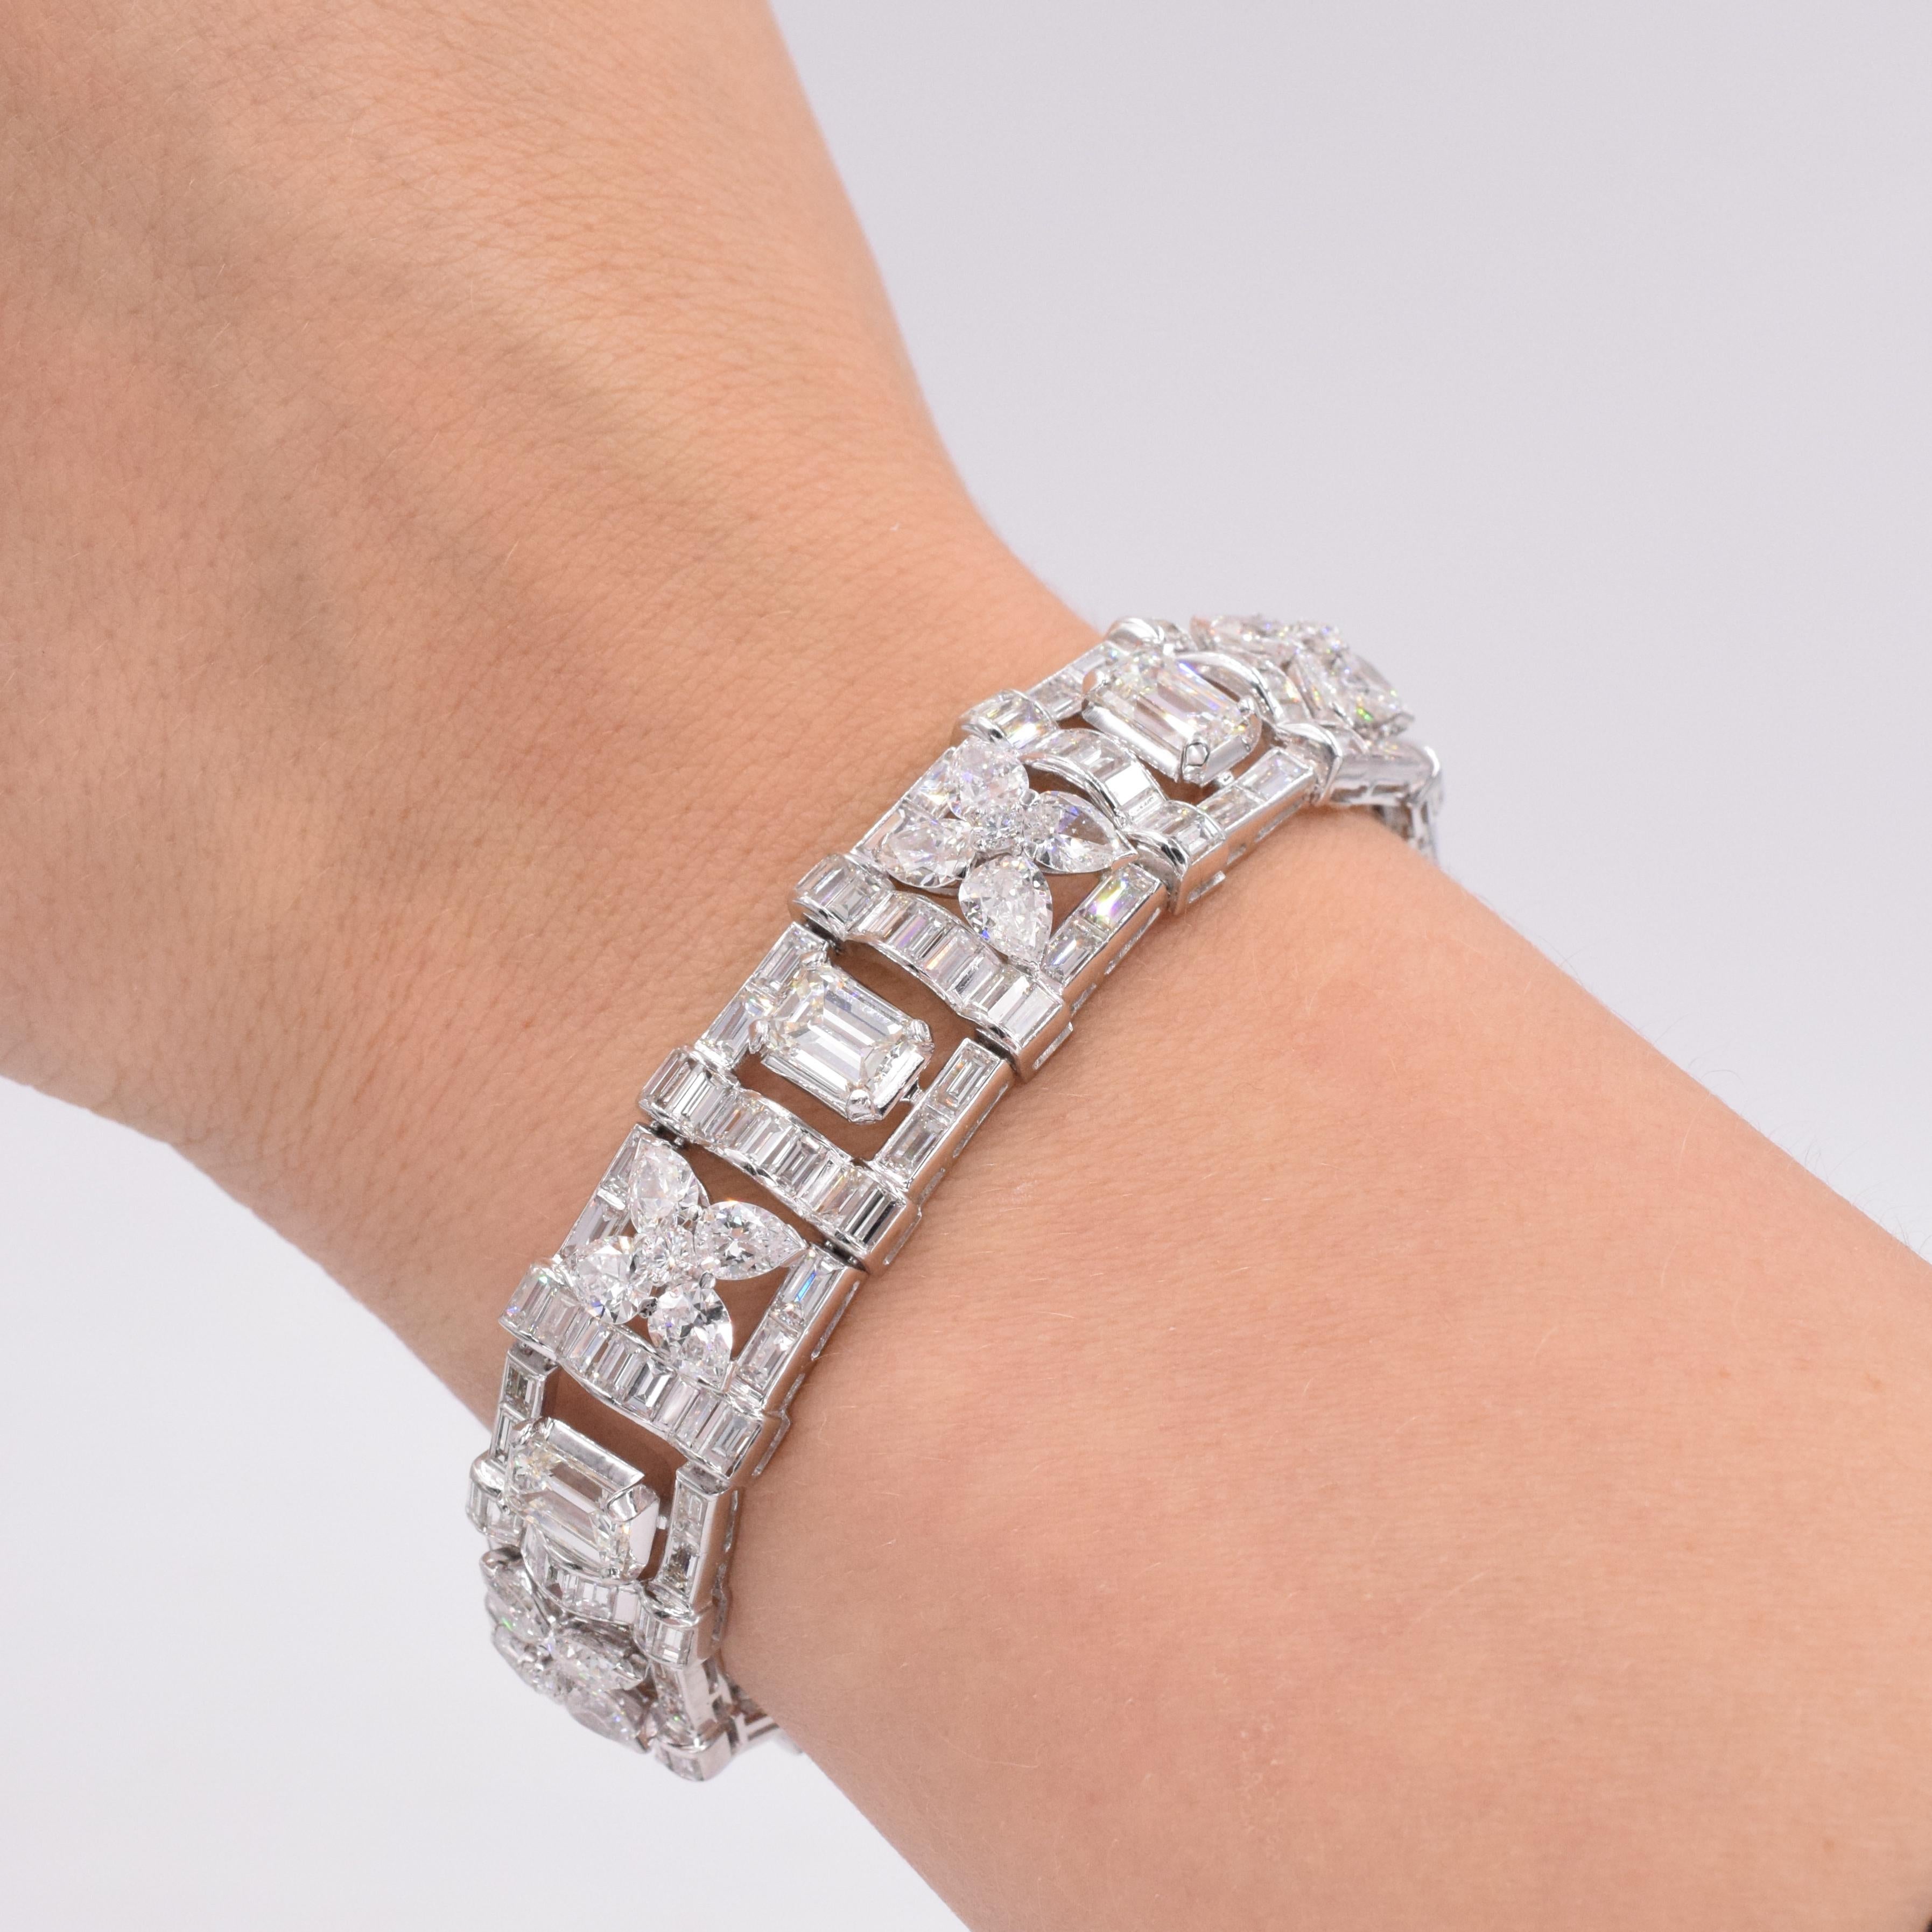 Artist Cartier Paris Diamond Bracelet